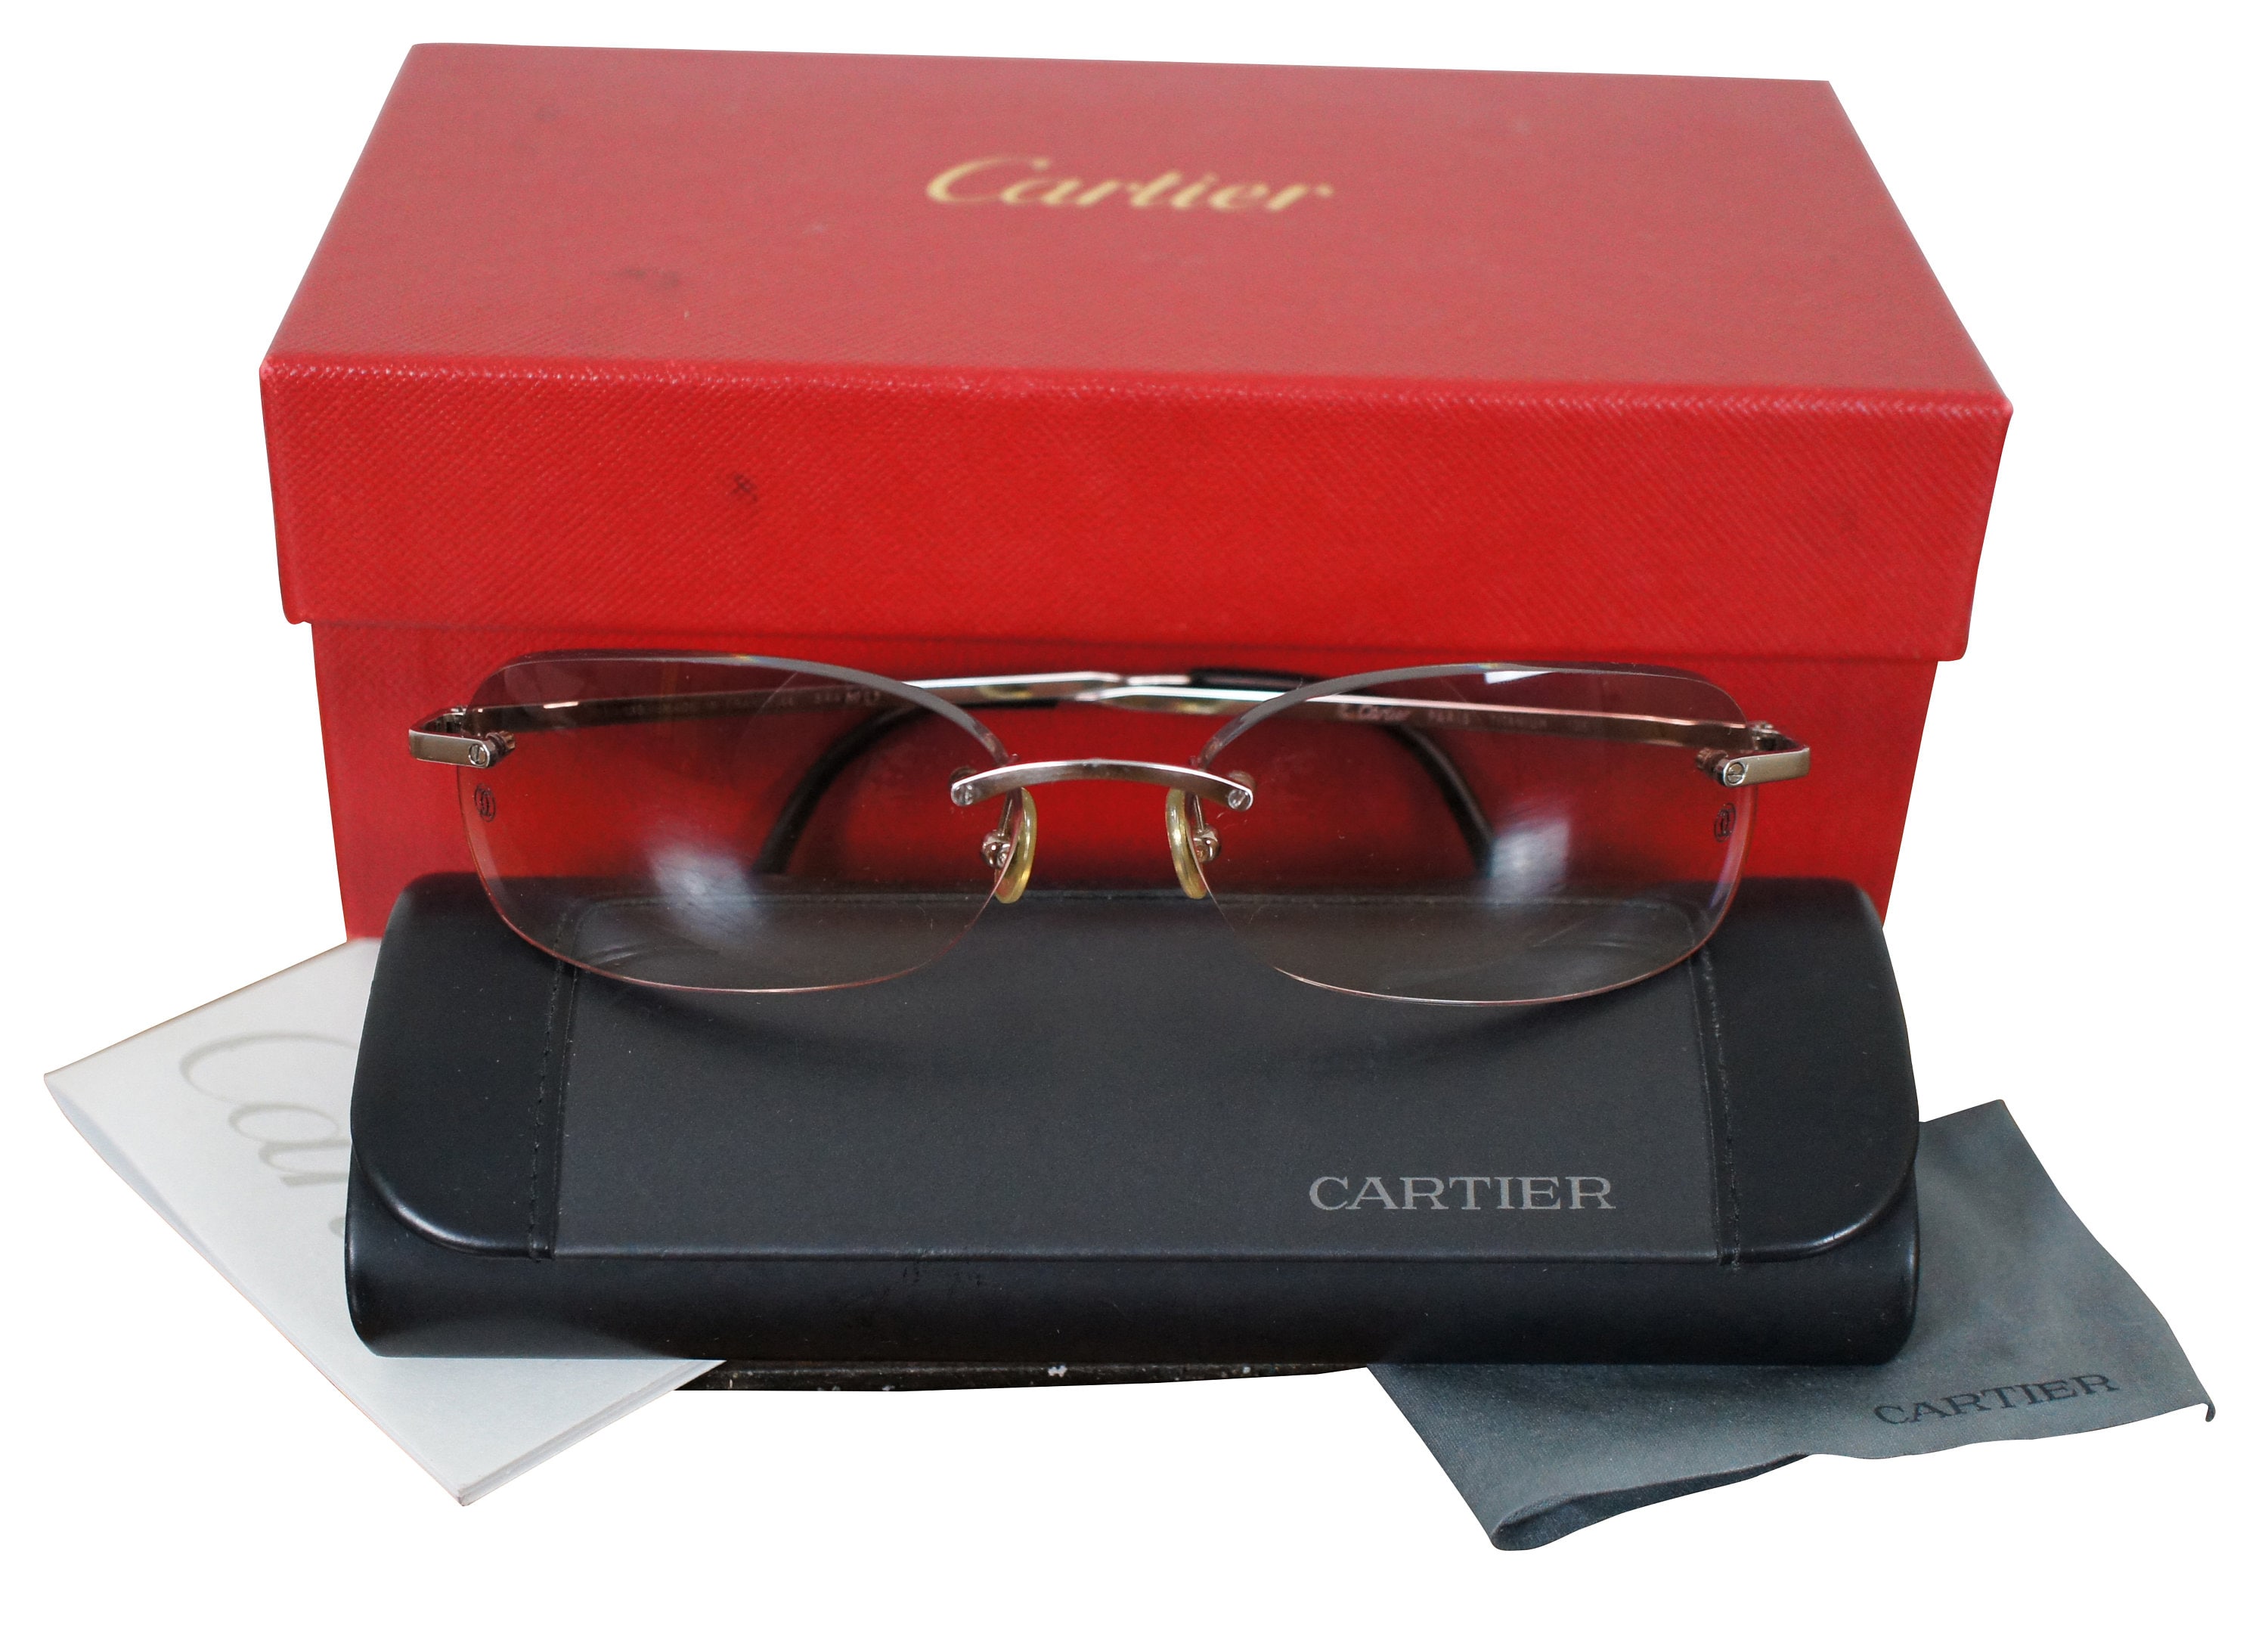 Cartier Sunglasses Case 